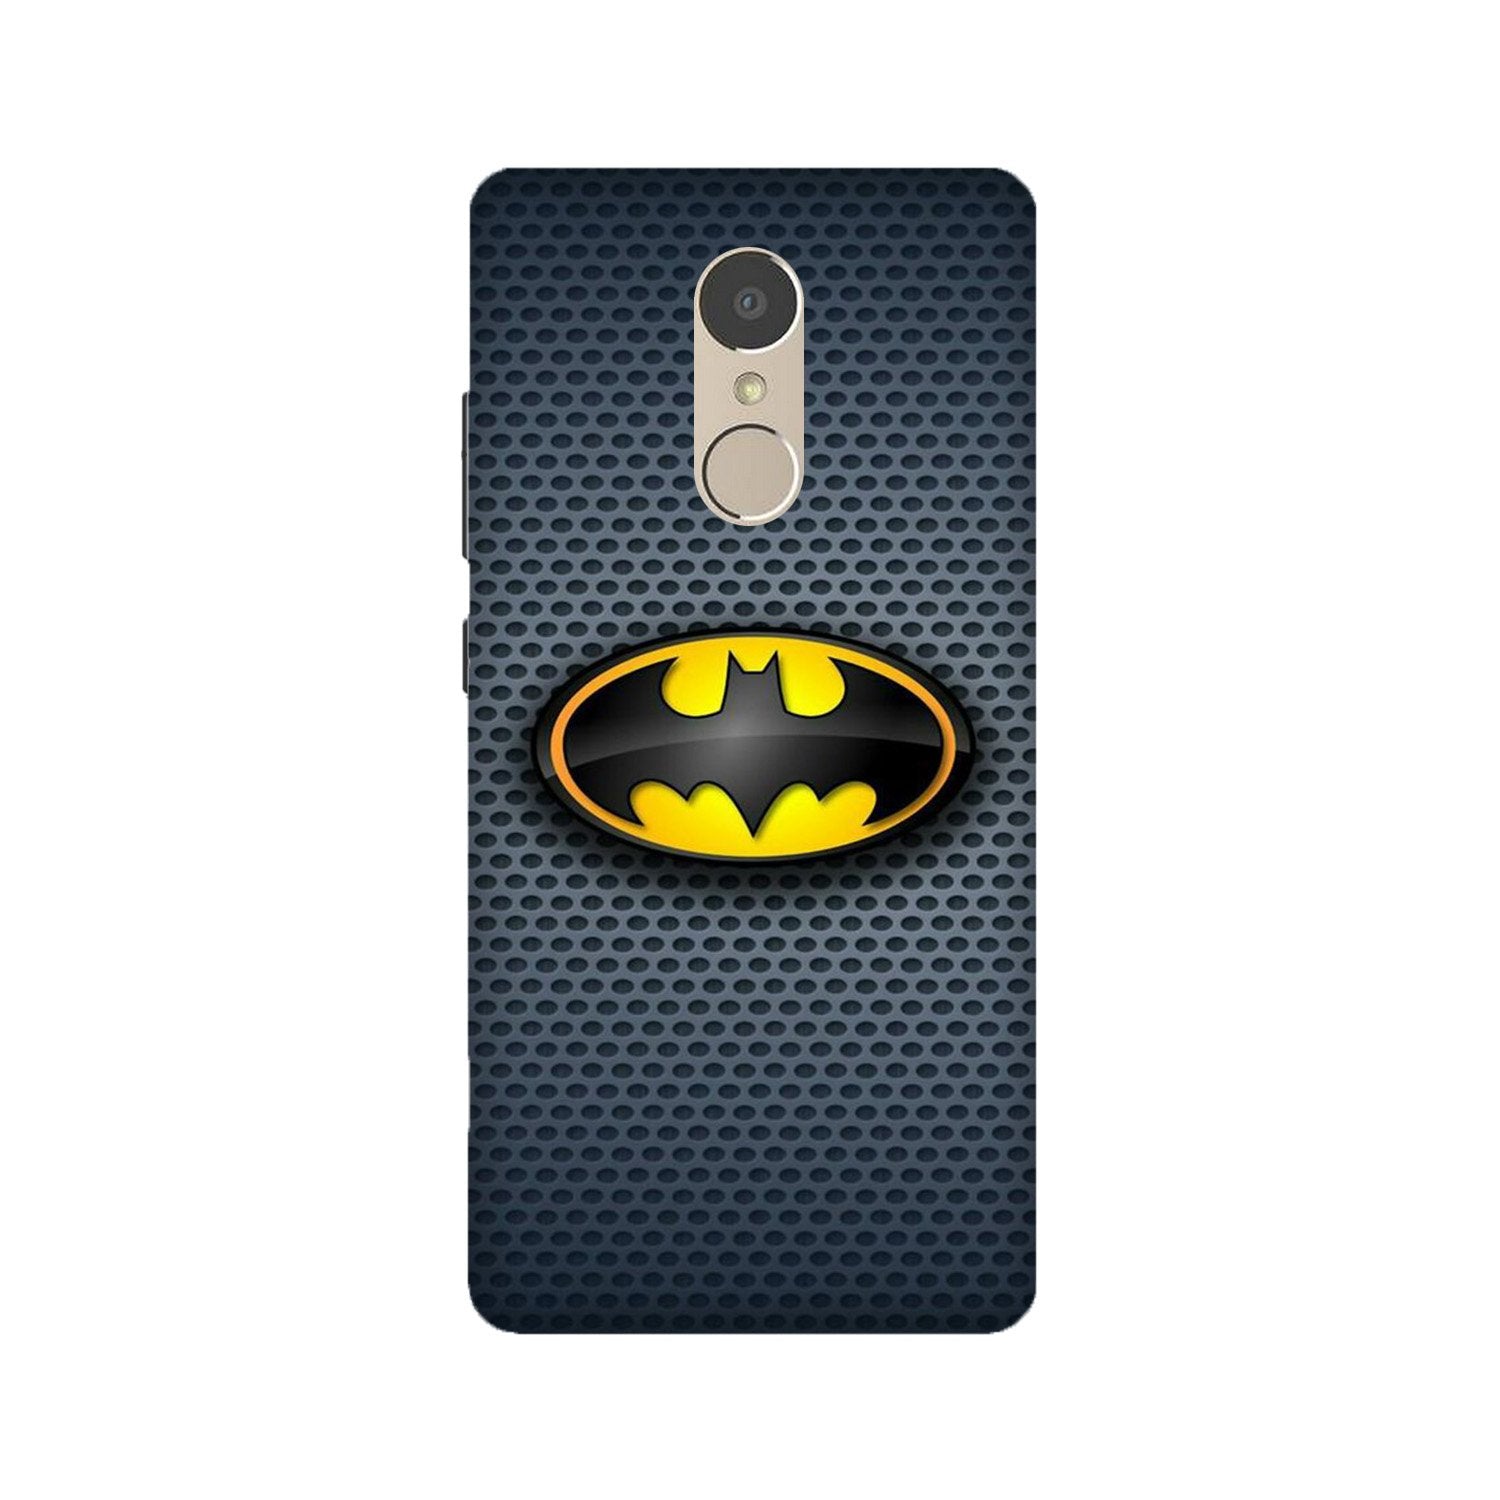 Batman Case for Lenovo K6 Note (Design No. 244)